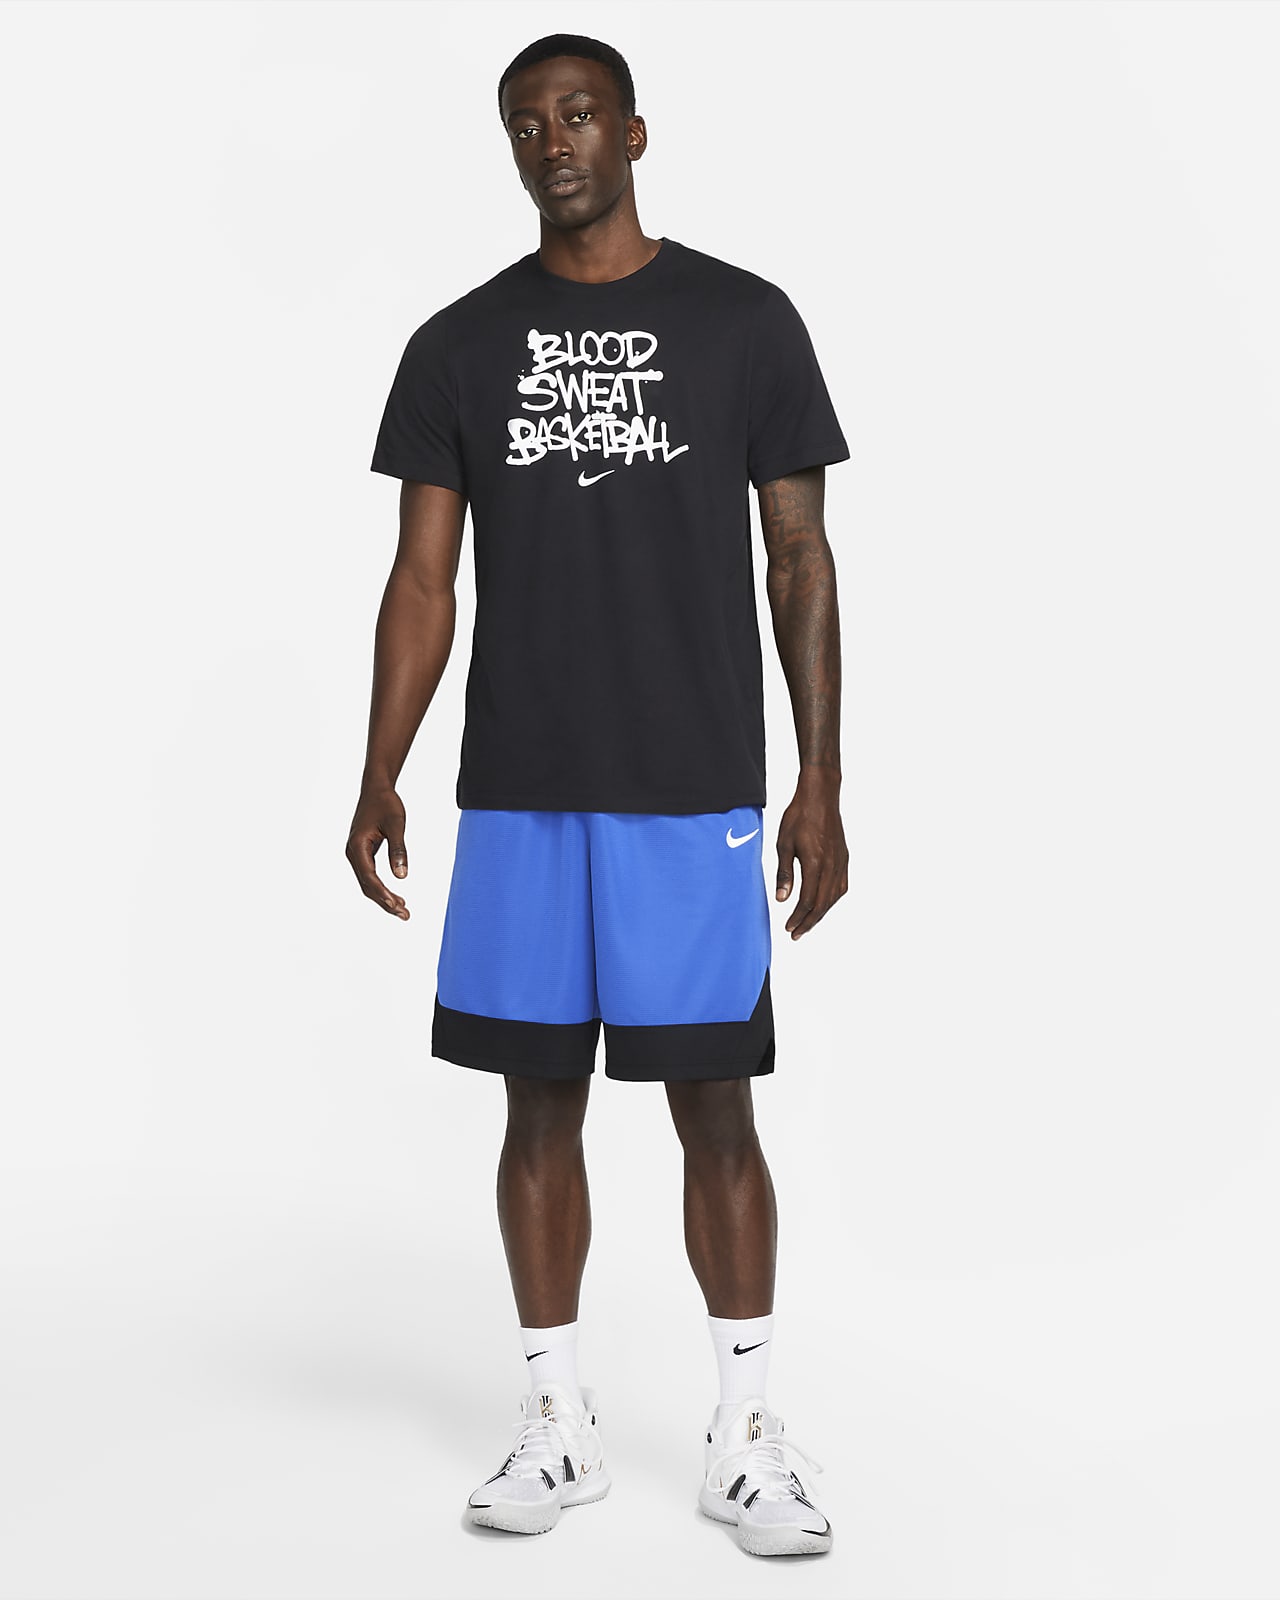 Basketball Shorts, T Shirts, Bottoms, Socks